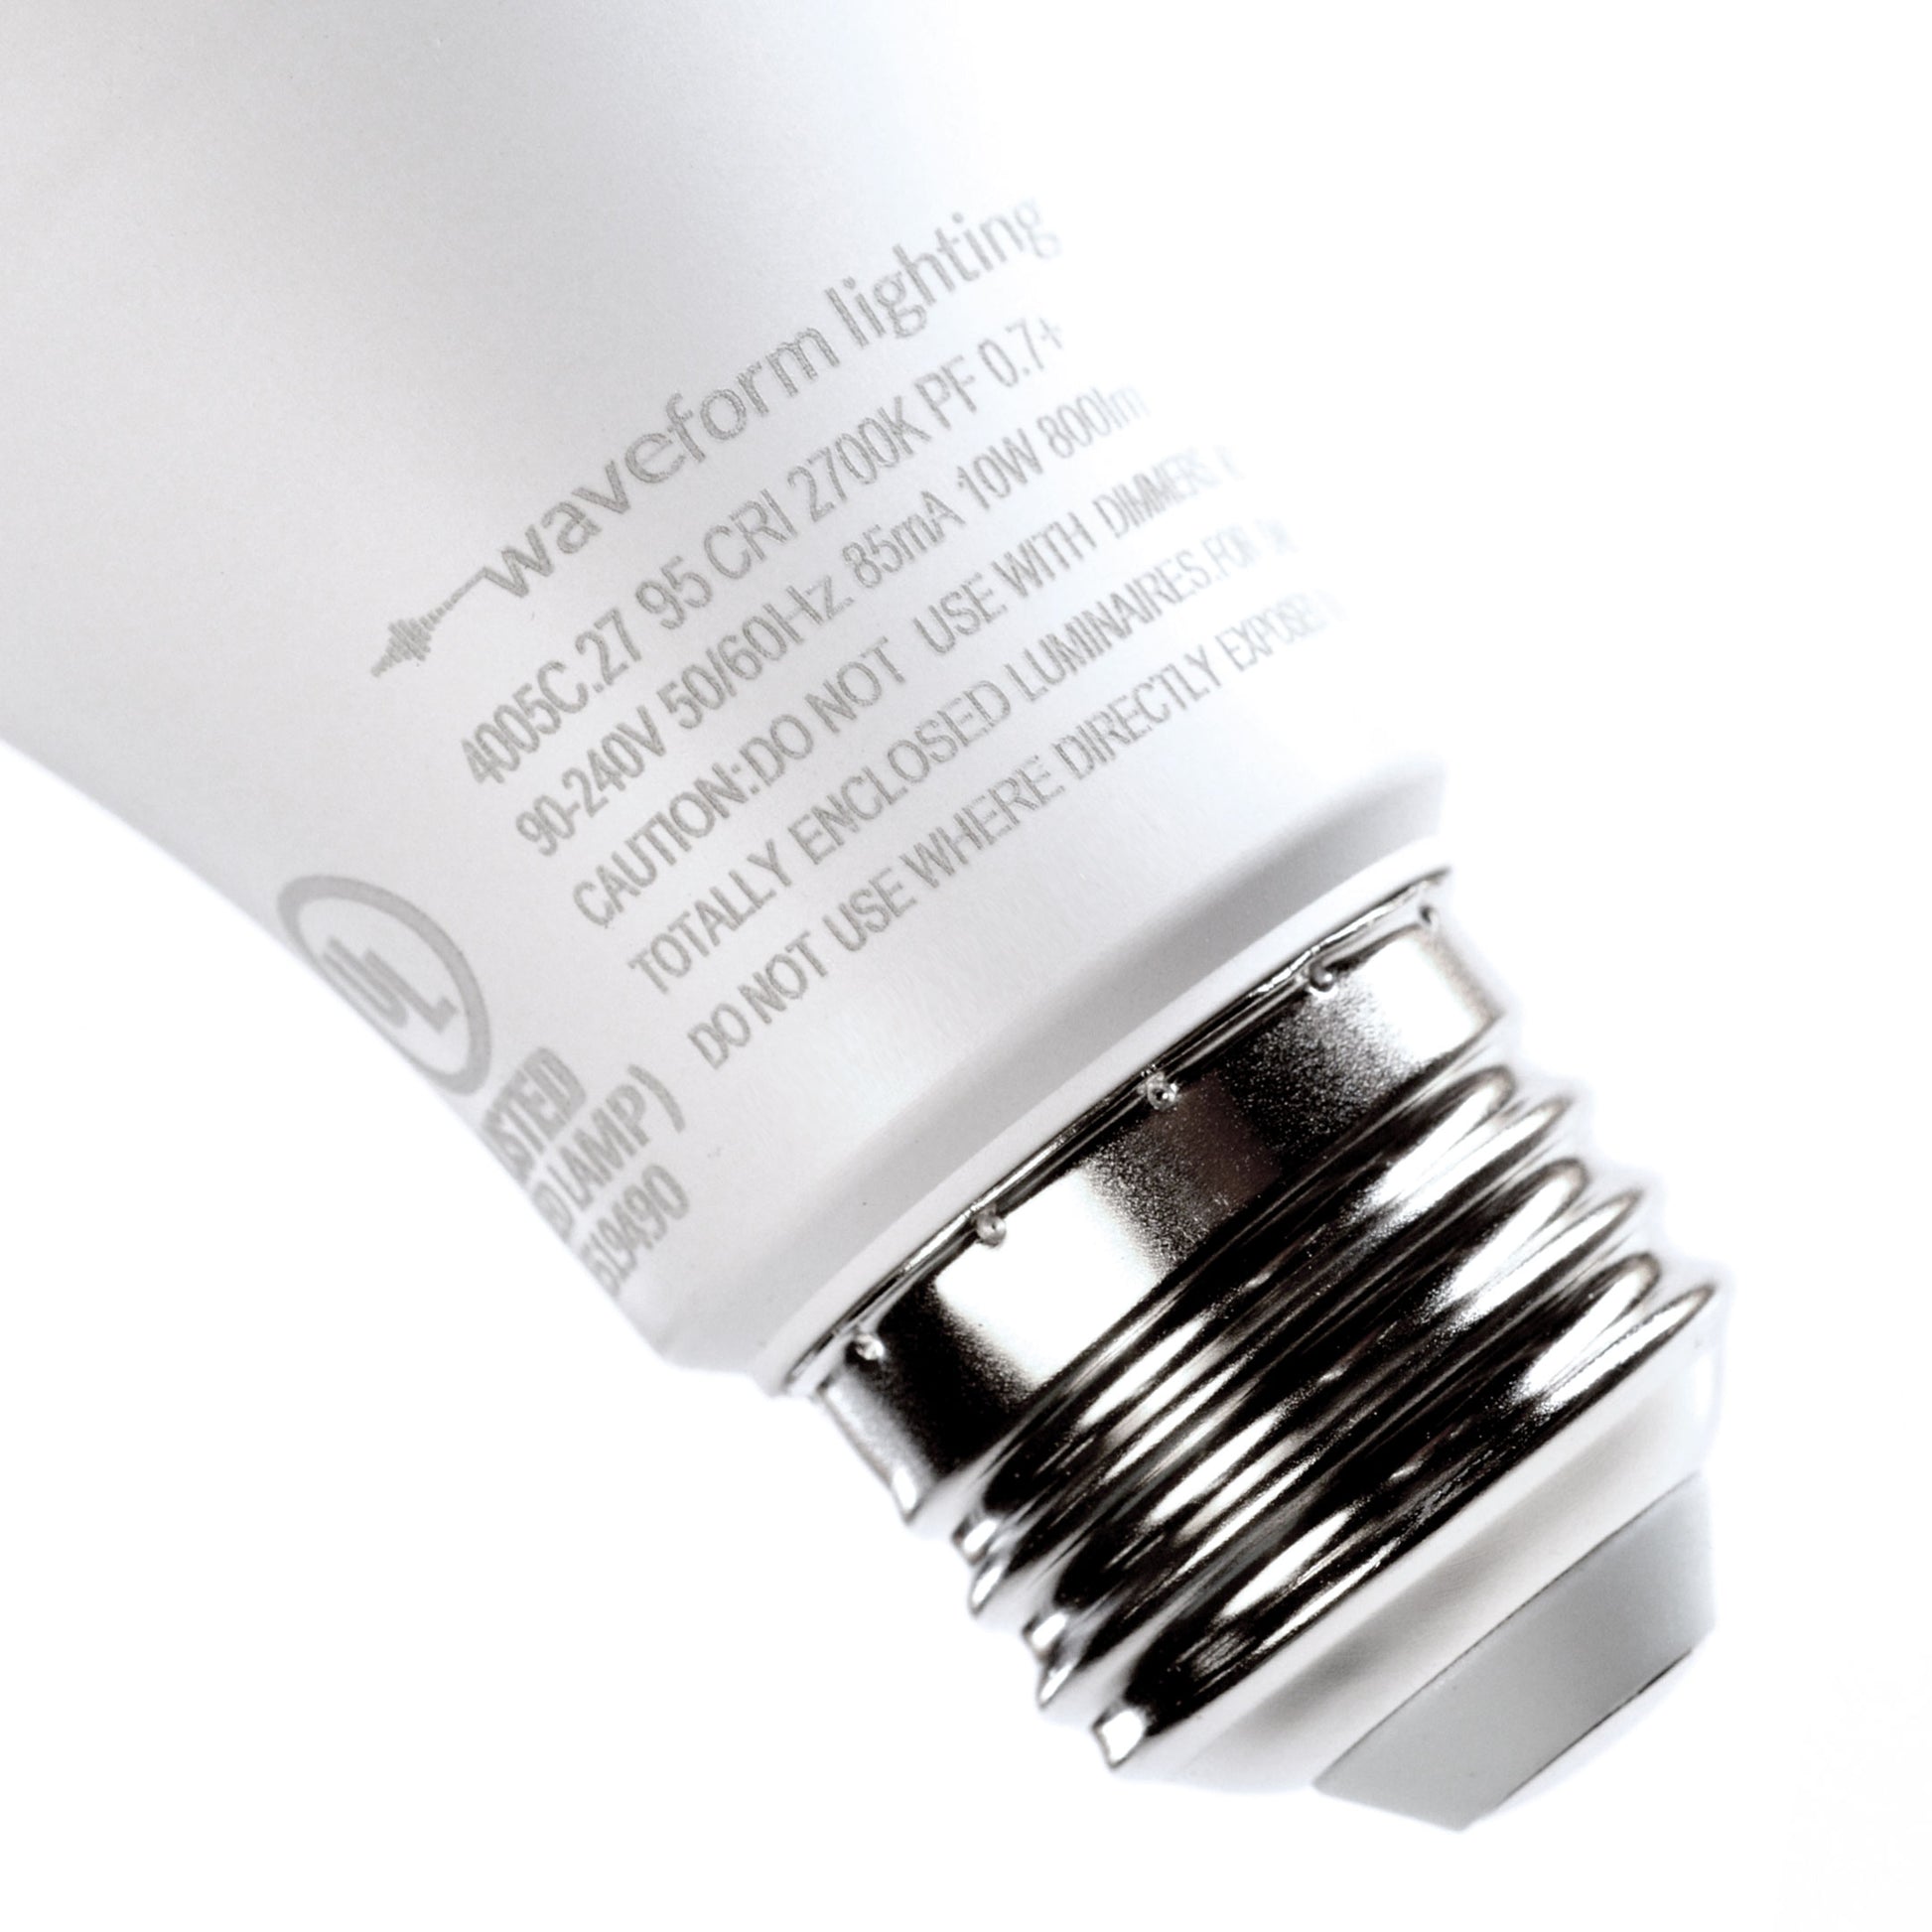 CENTRIC Flicker-Free A19 10W LED – Waveform Lighting